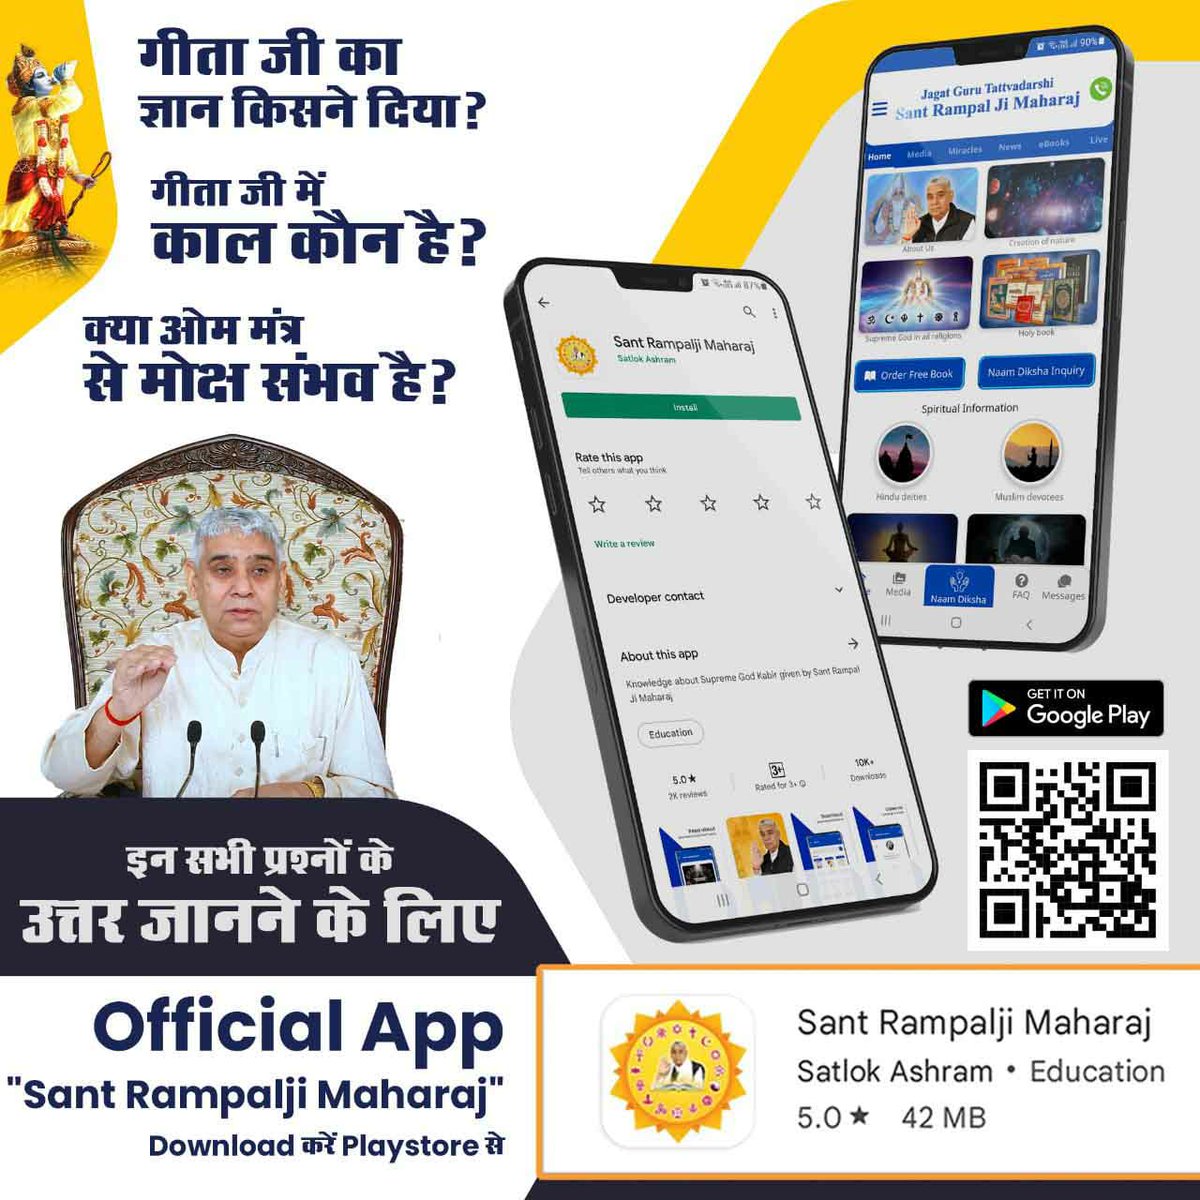 #App #socialmedia #indianapp #startup 
#trendingnews #onlineshopping #makeinindia #entrepreneur #india #social #media #newapp
#Sant_Rampalji_Maharaj_App
#SantRampalJiMaharaj #SaintRampalJi
भूत प्रेत की बाधा से मुक्ति कैसे मिल सकती है?
जानने के लिए 'Sant Rampalji Maharaj'